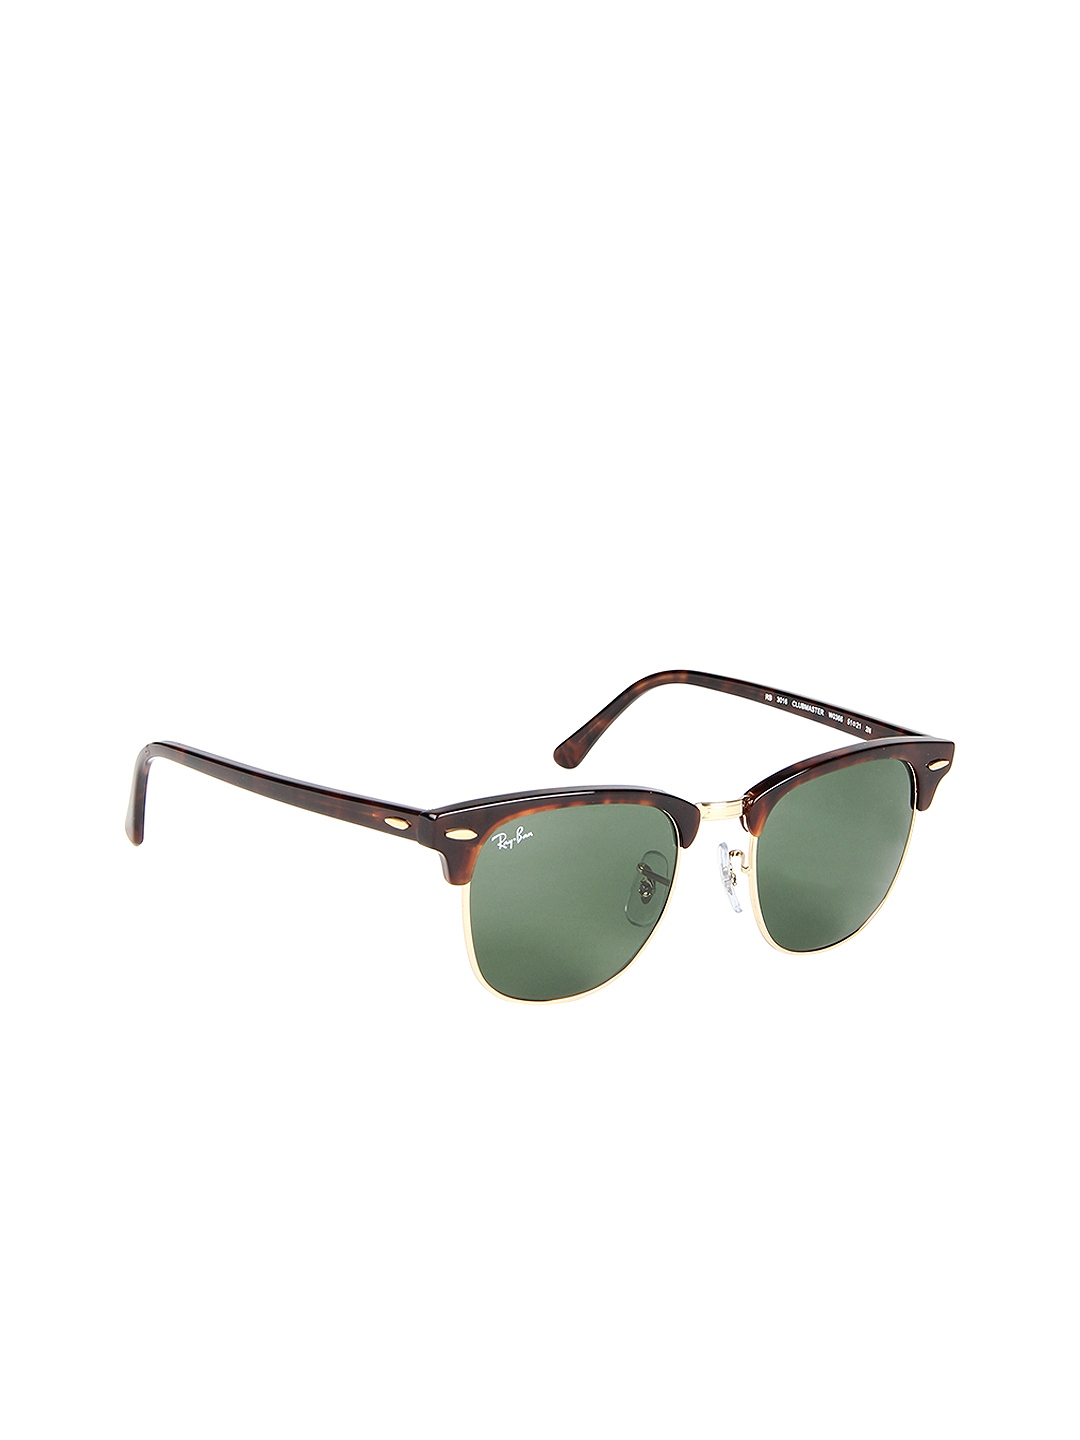 Buy Ray Ban Men Browline Sunglasses 0RB3016 - Sunglasses for Men 255304 |  Myntra